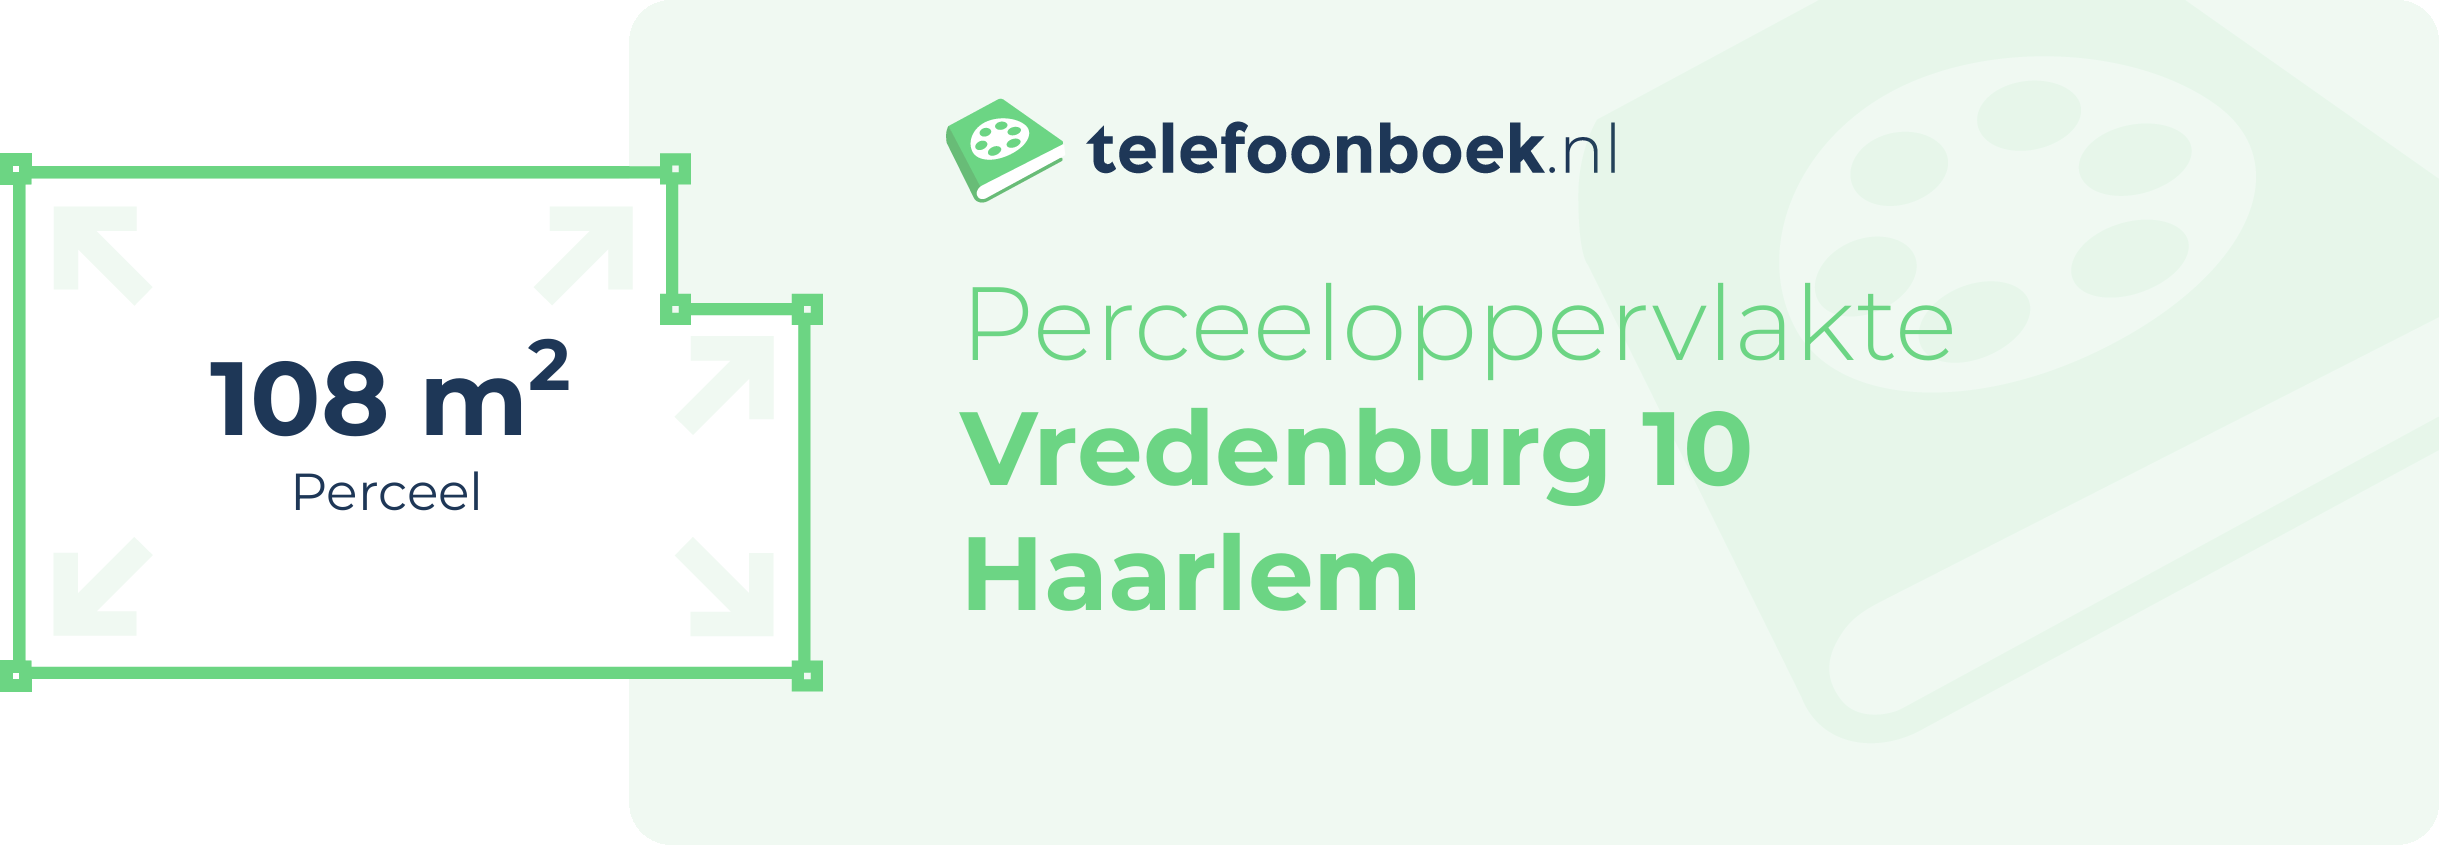 Perceeloppervlakte Vredenburg 10 Haarlem